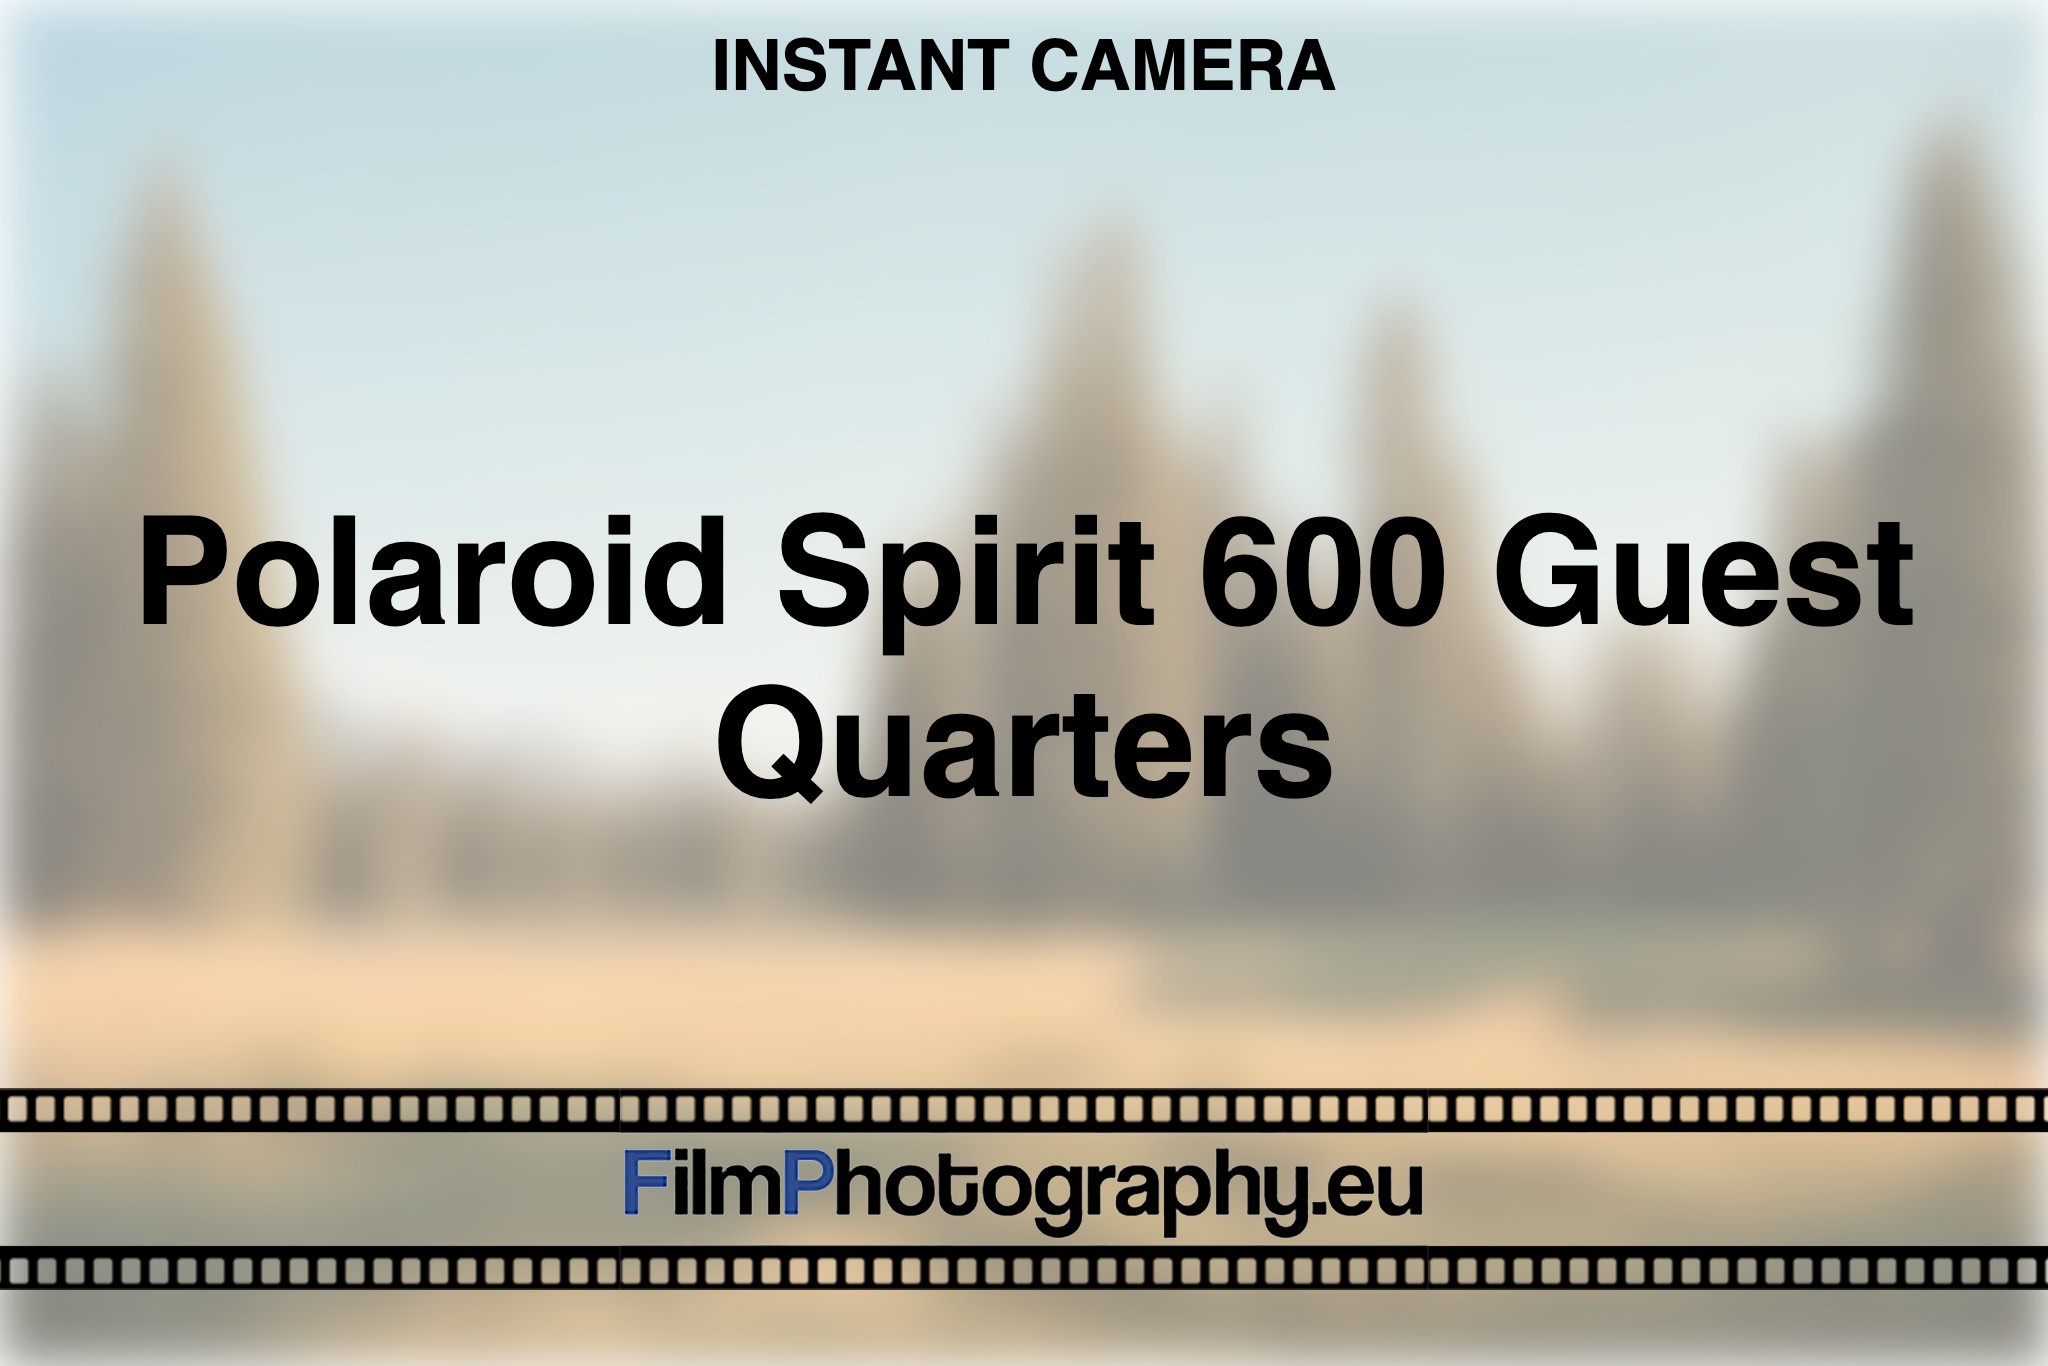 polaroid-spirit-600-guest-quarters-instant-camera-bnv